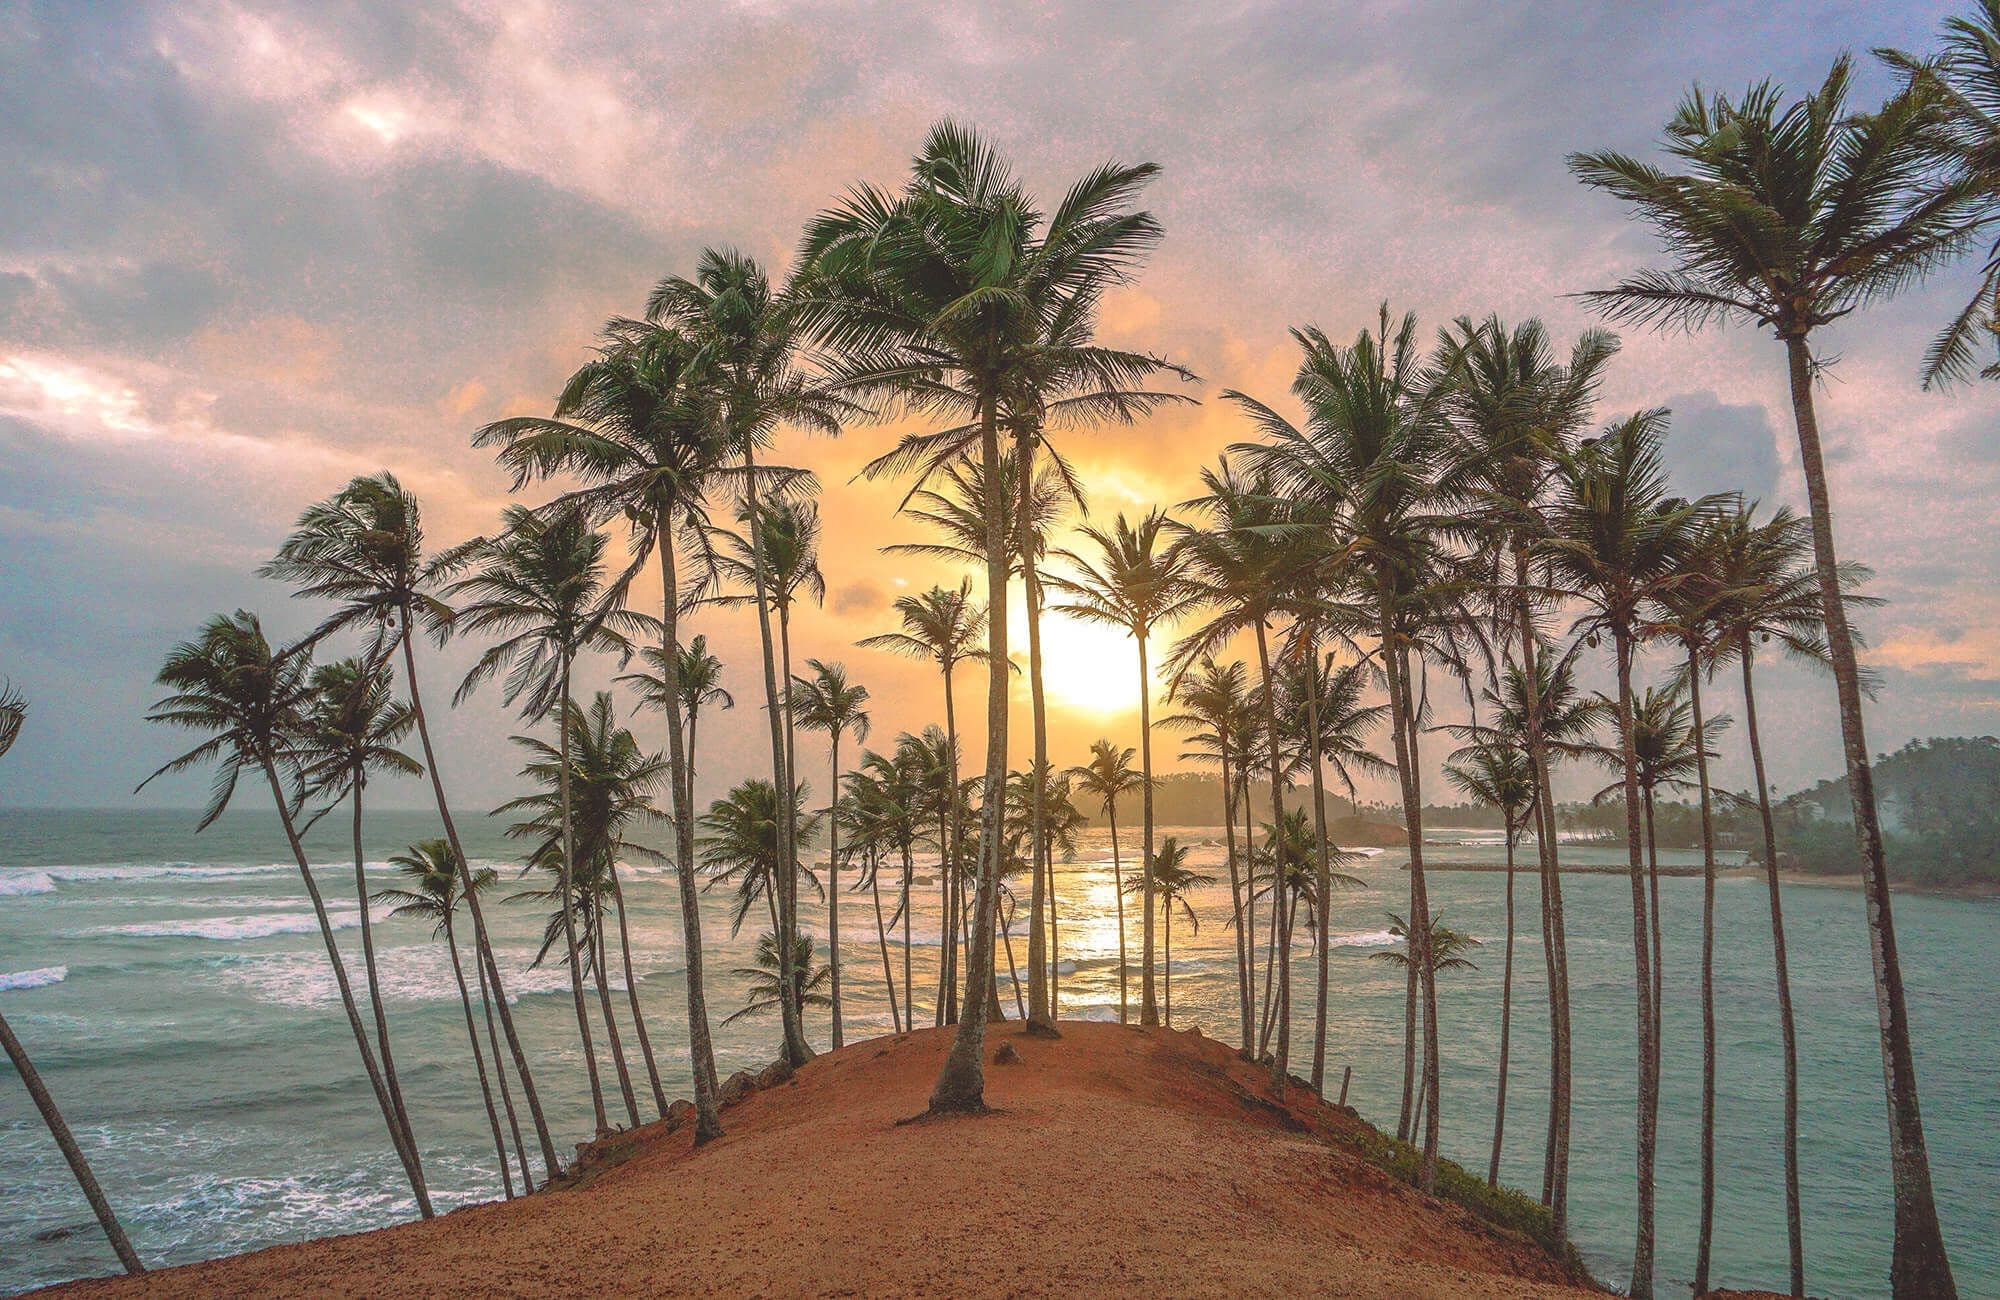 The famous Mirissa coconut tree beach in Sri Lanka